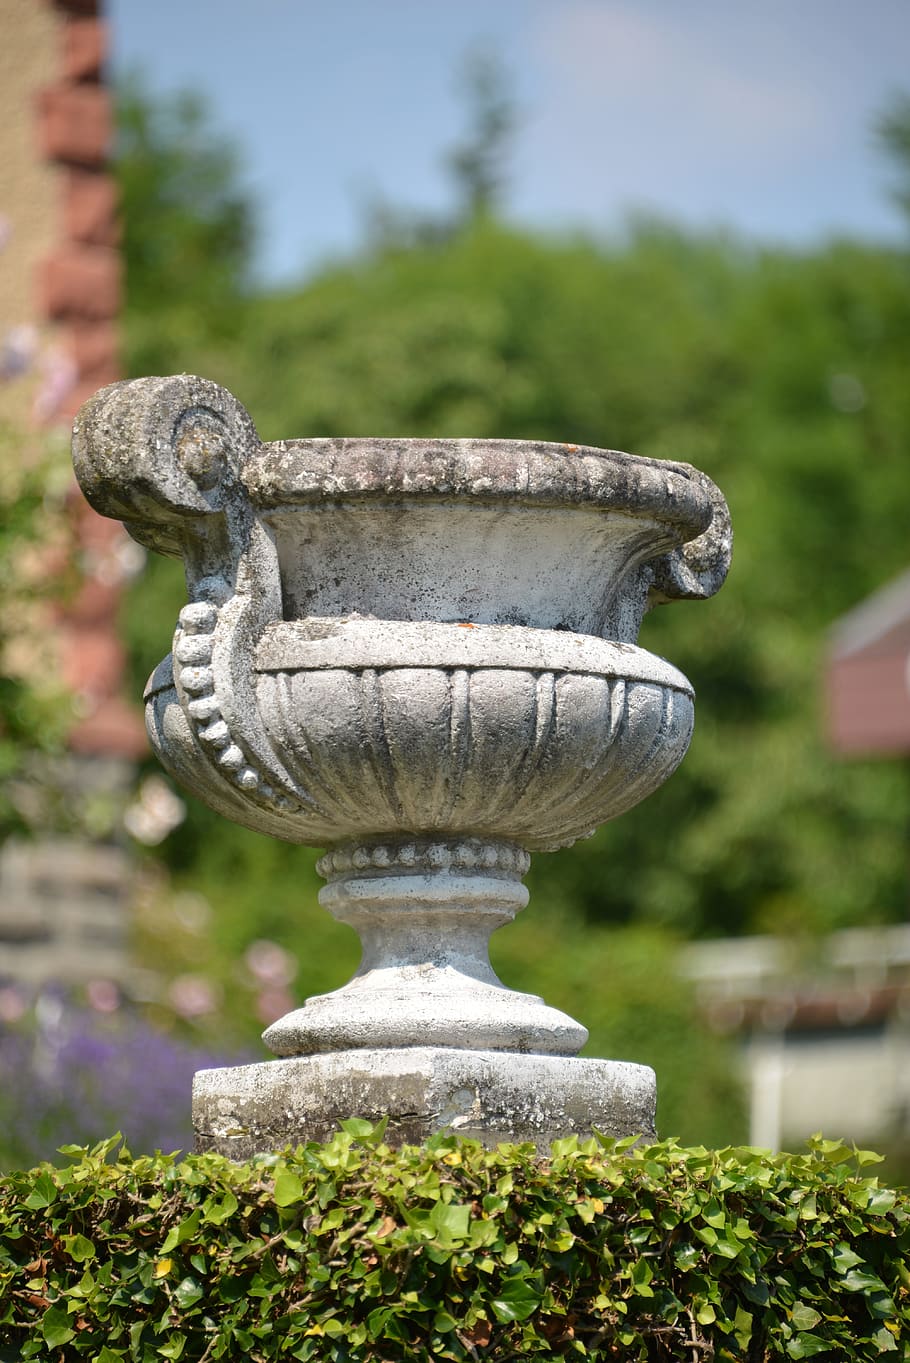 Pot, Vessel, Greek, Romans, Old, decorative, arts crafts, antique, overgrown, rock carving